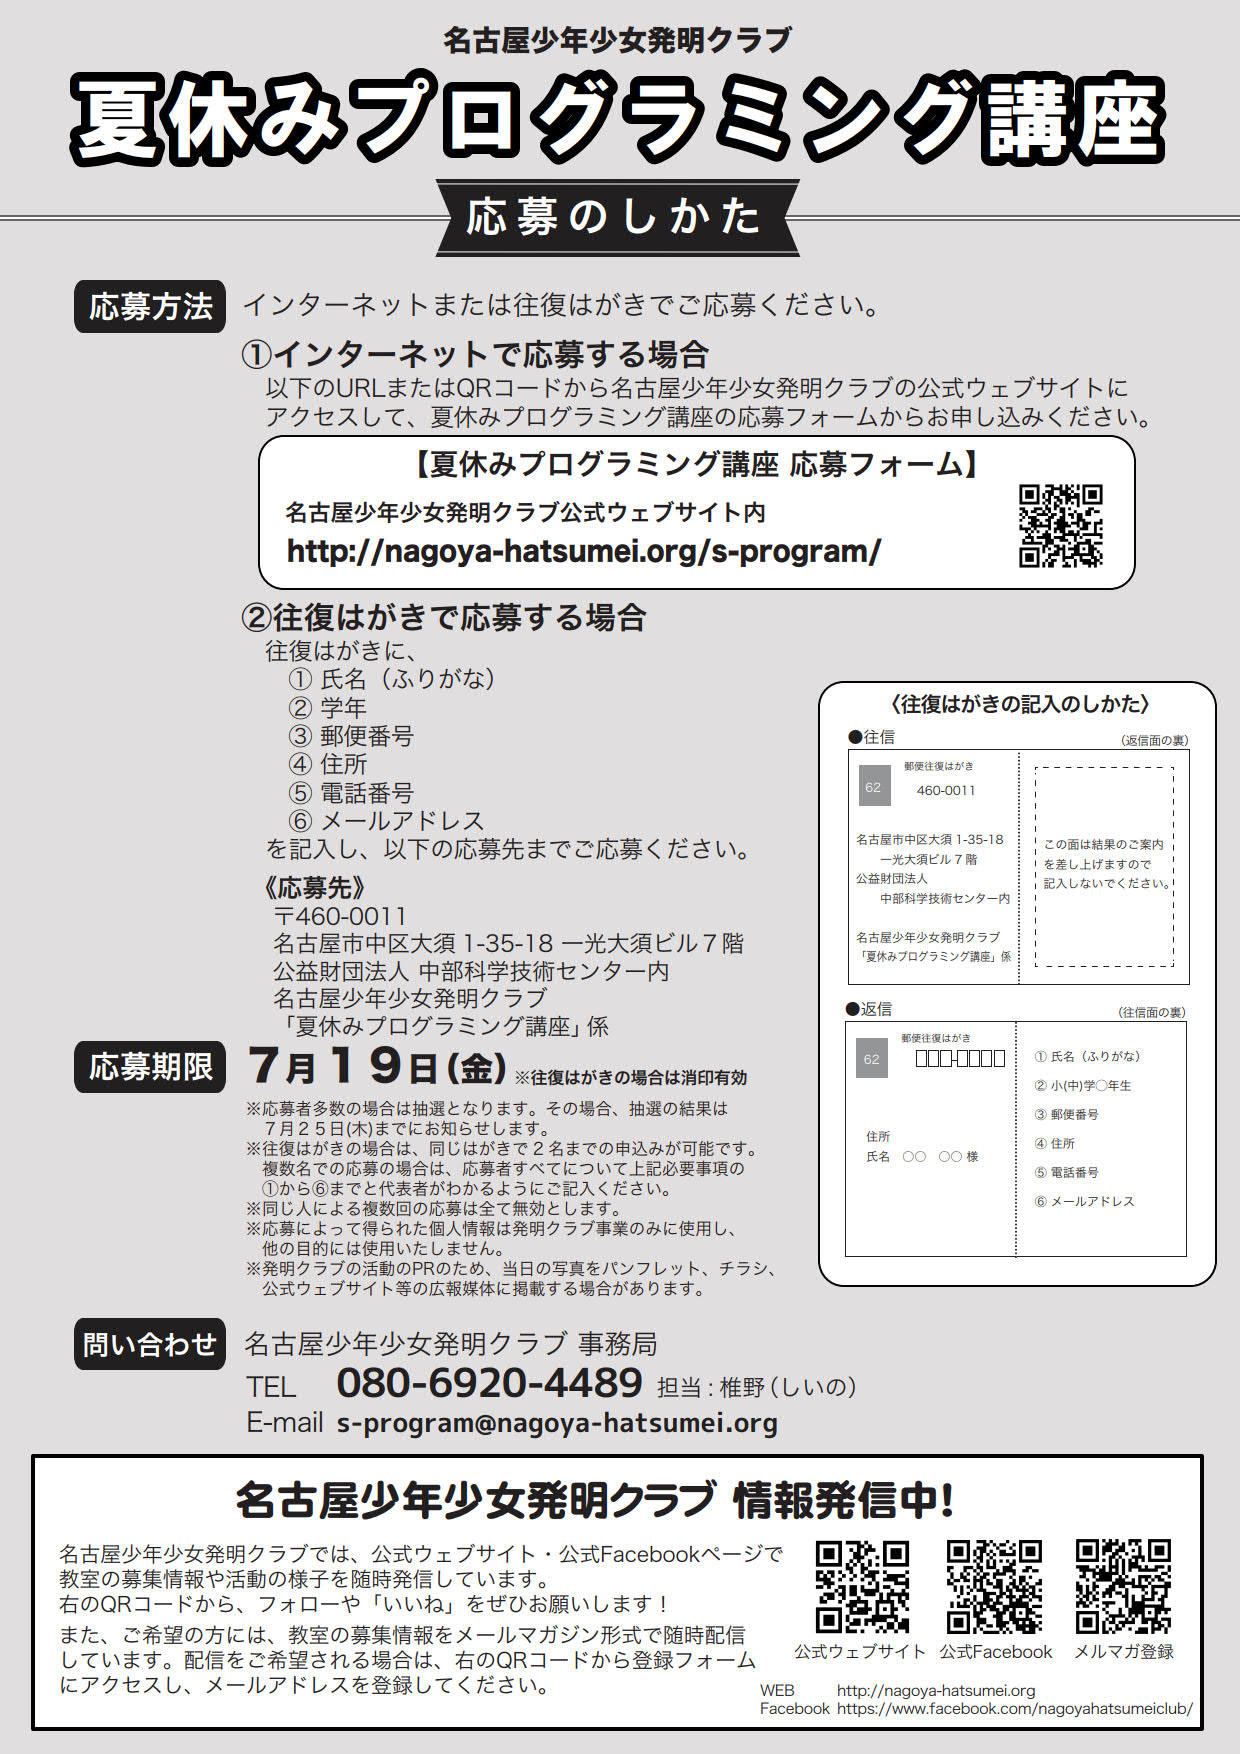 https://www.nitech.ac.jp/event/mt_imgs/chiarashi-s-program-2019_2.jpg